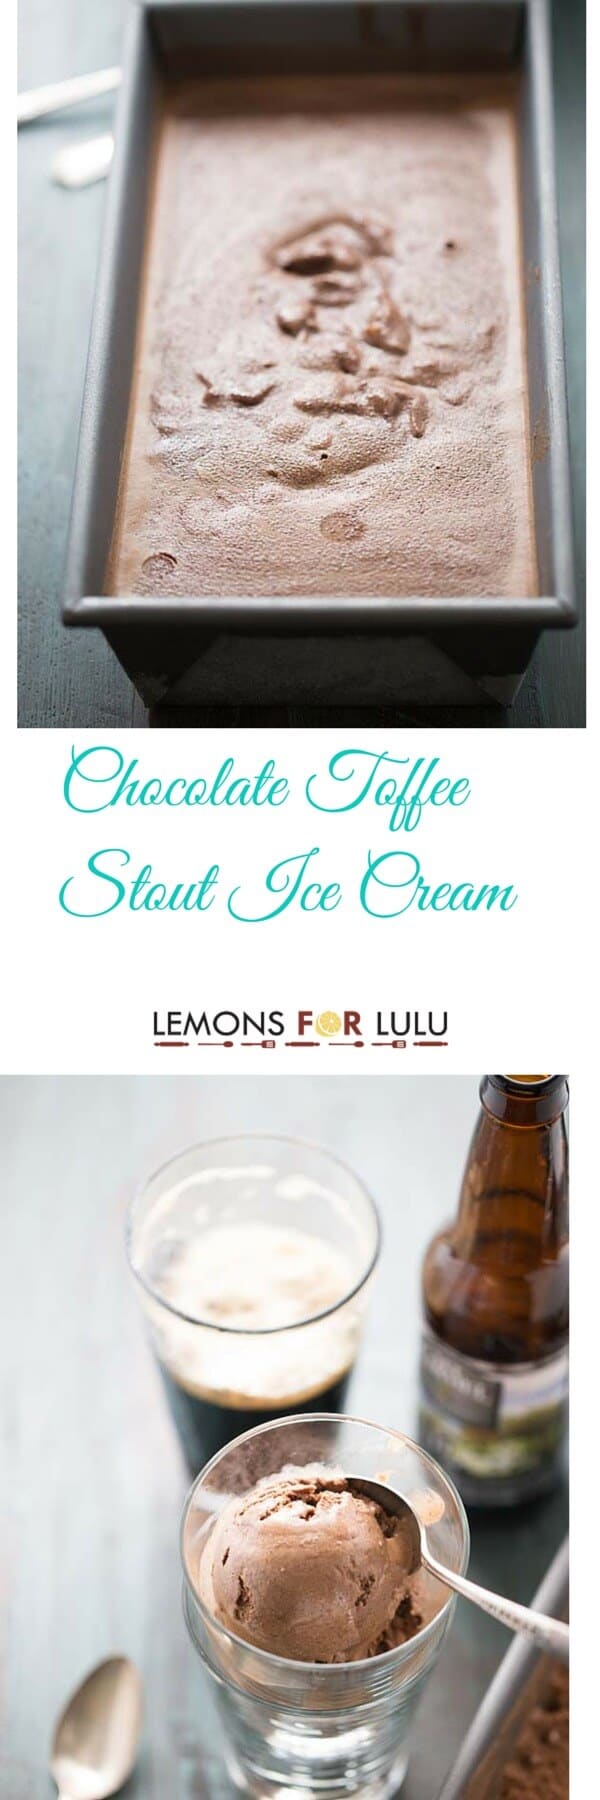 Chocolate Toffee Stout Ice Cream Recipe - LemonsforLulu.com